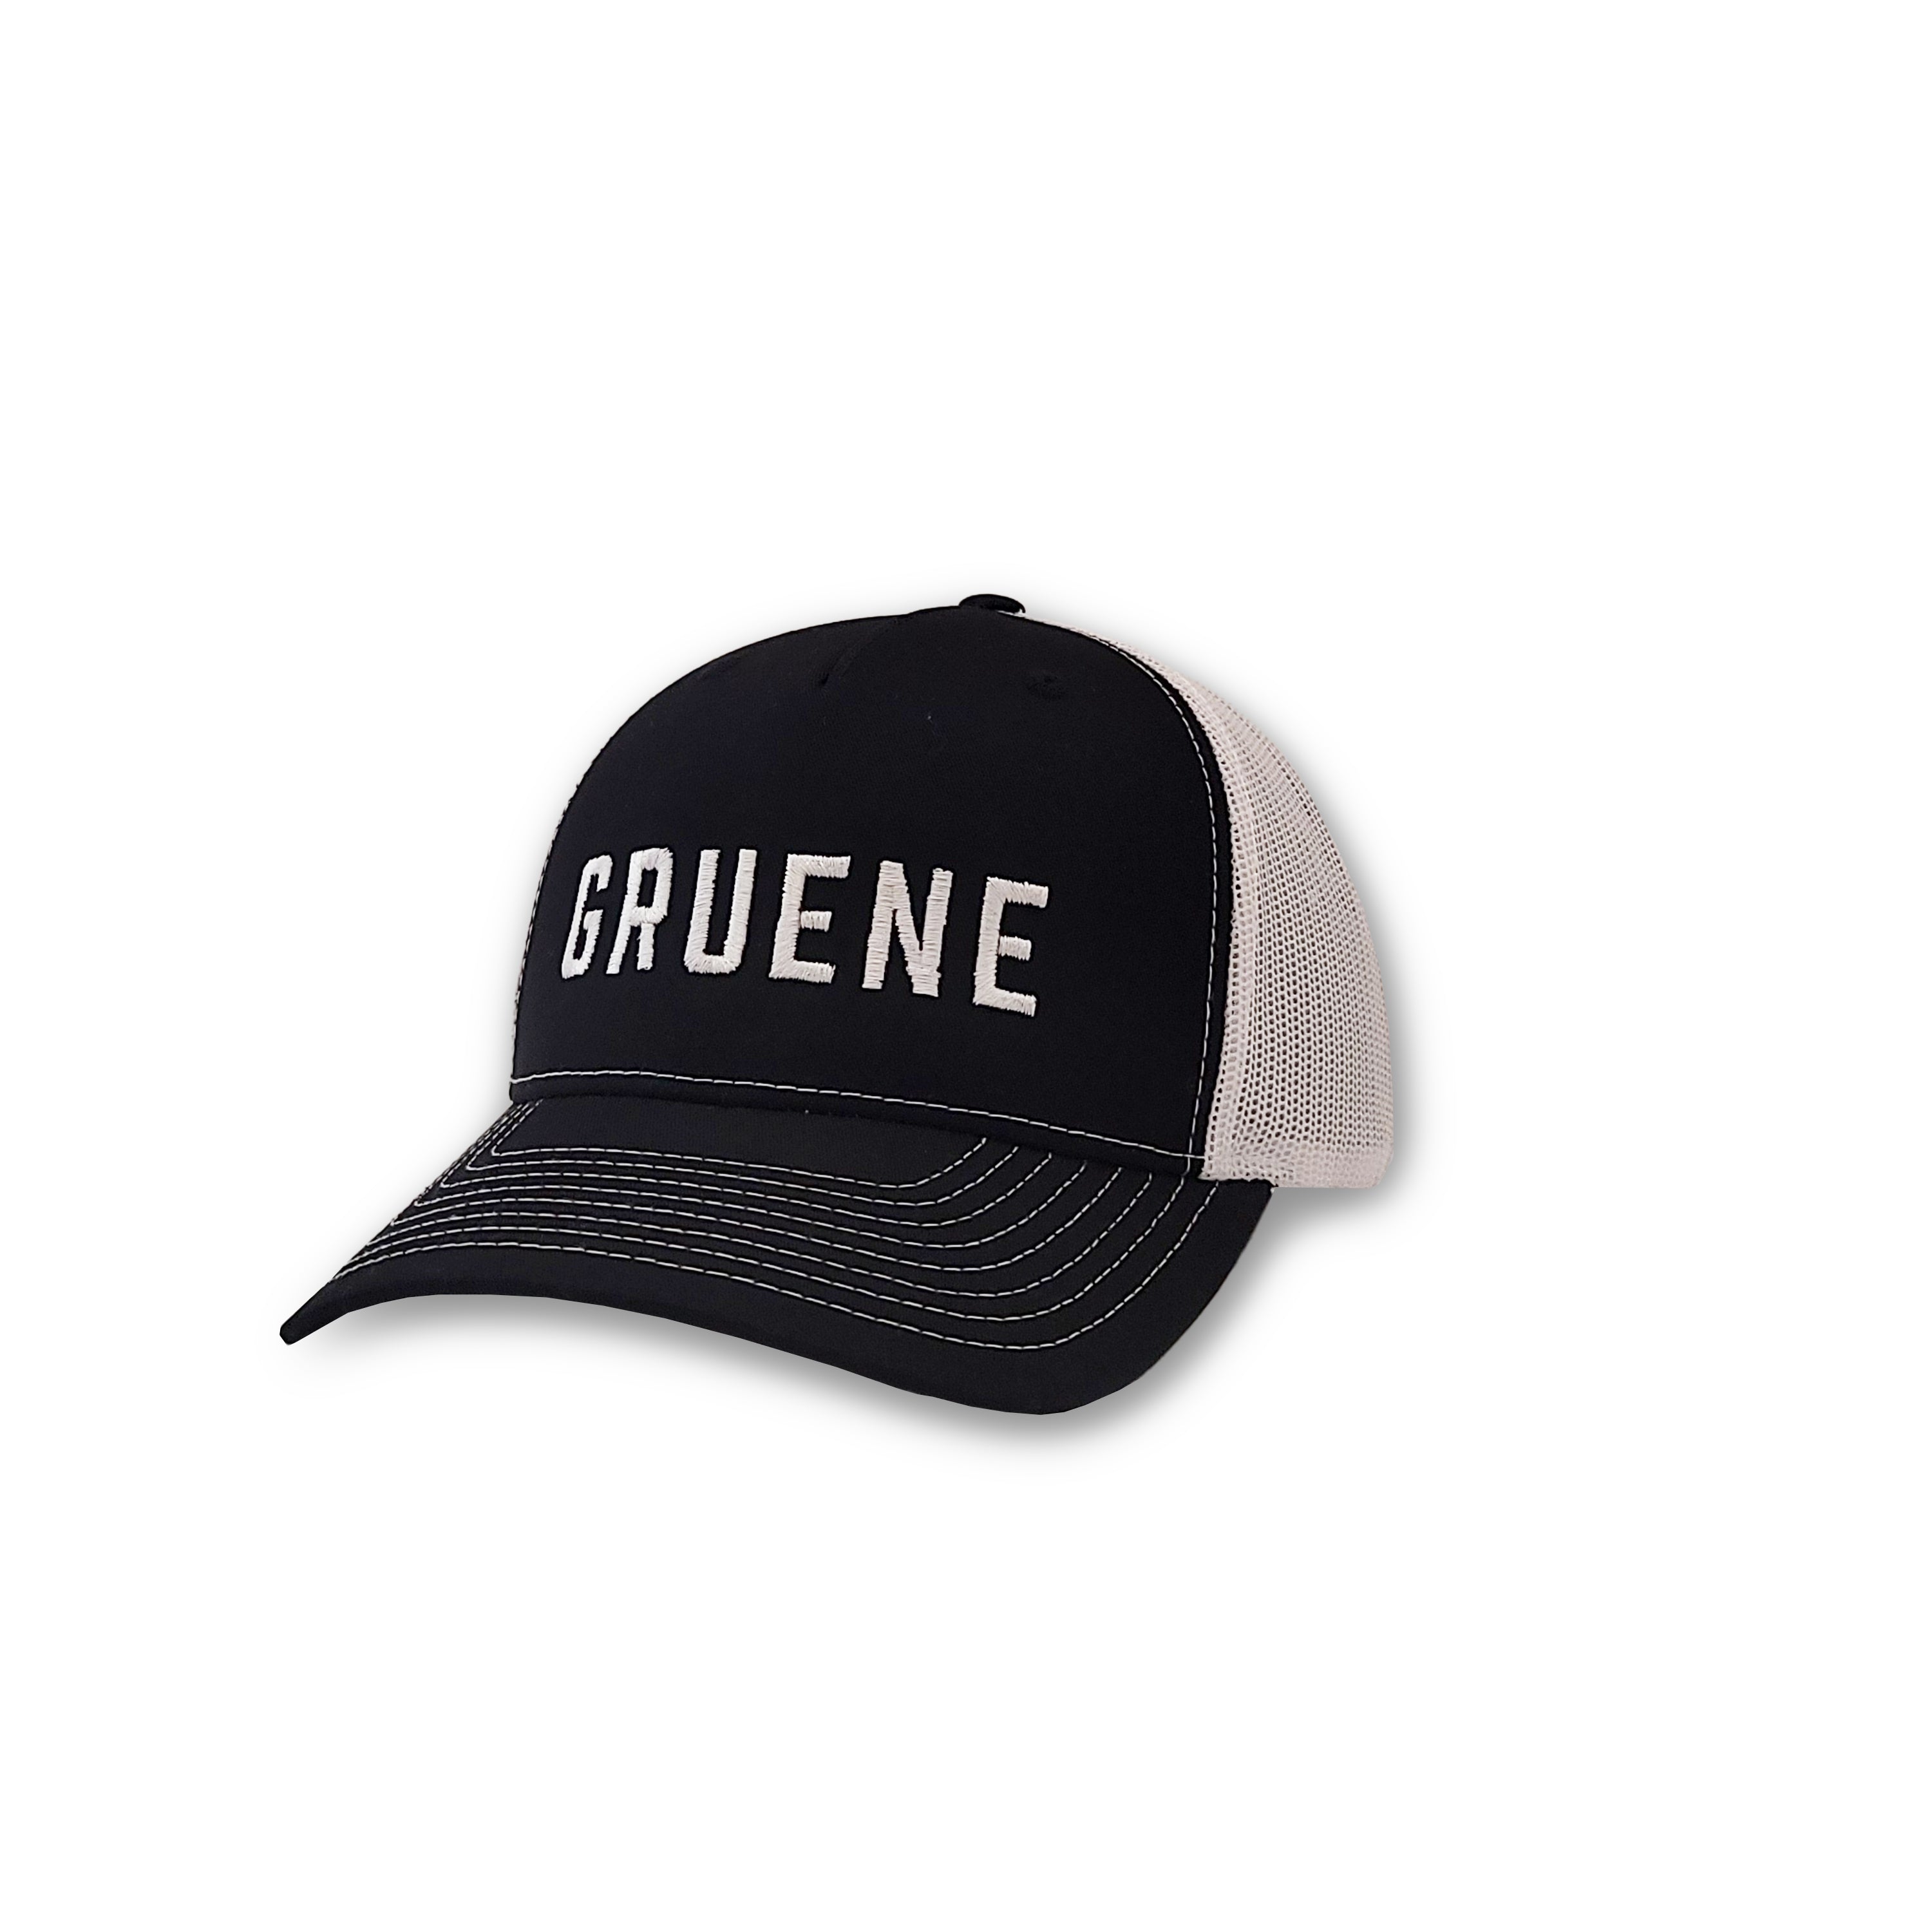 Varsity Gruene cap